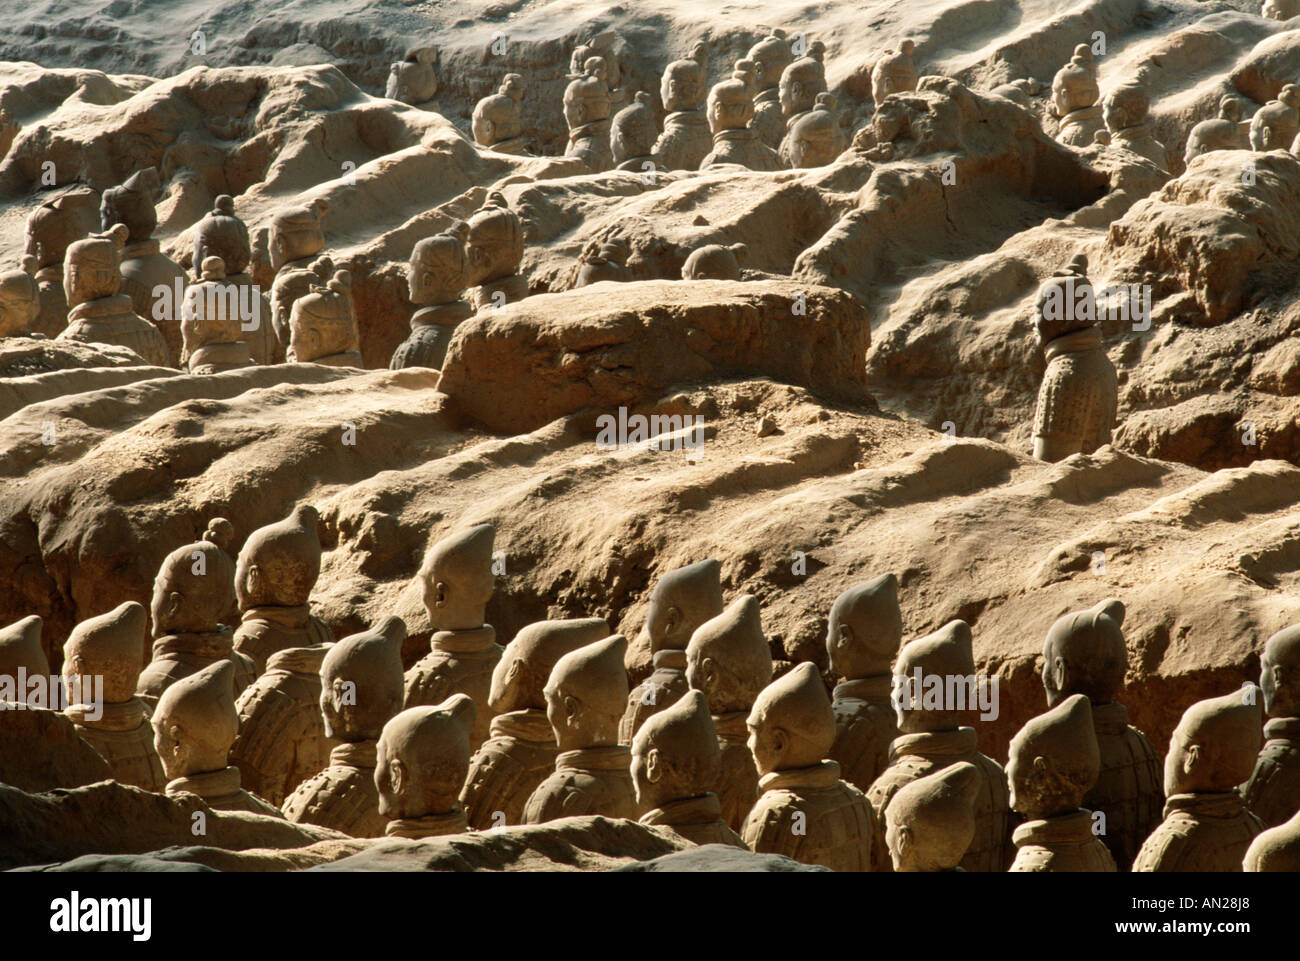 Guerrieri di Terracotta / Esercito di Terracotta (Dinastia Qin), Xian, Provincia di Shaanxi, Cina Foto Stock